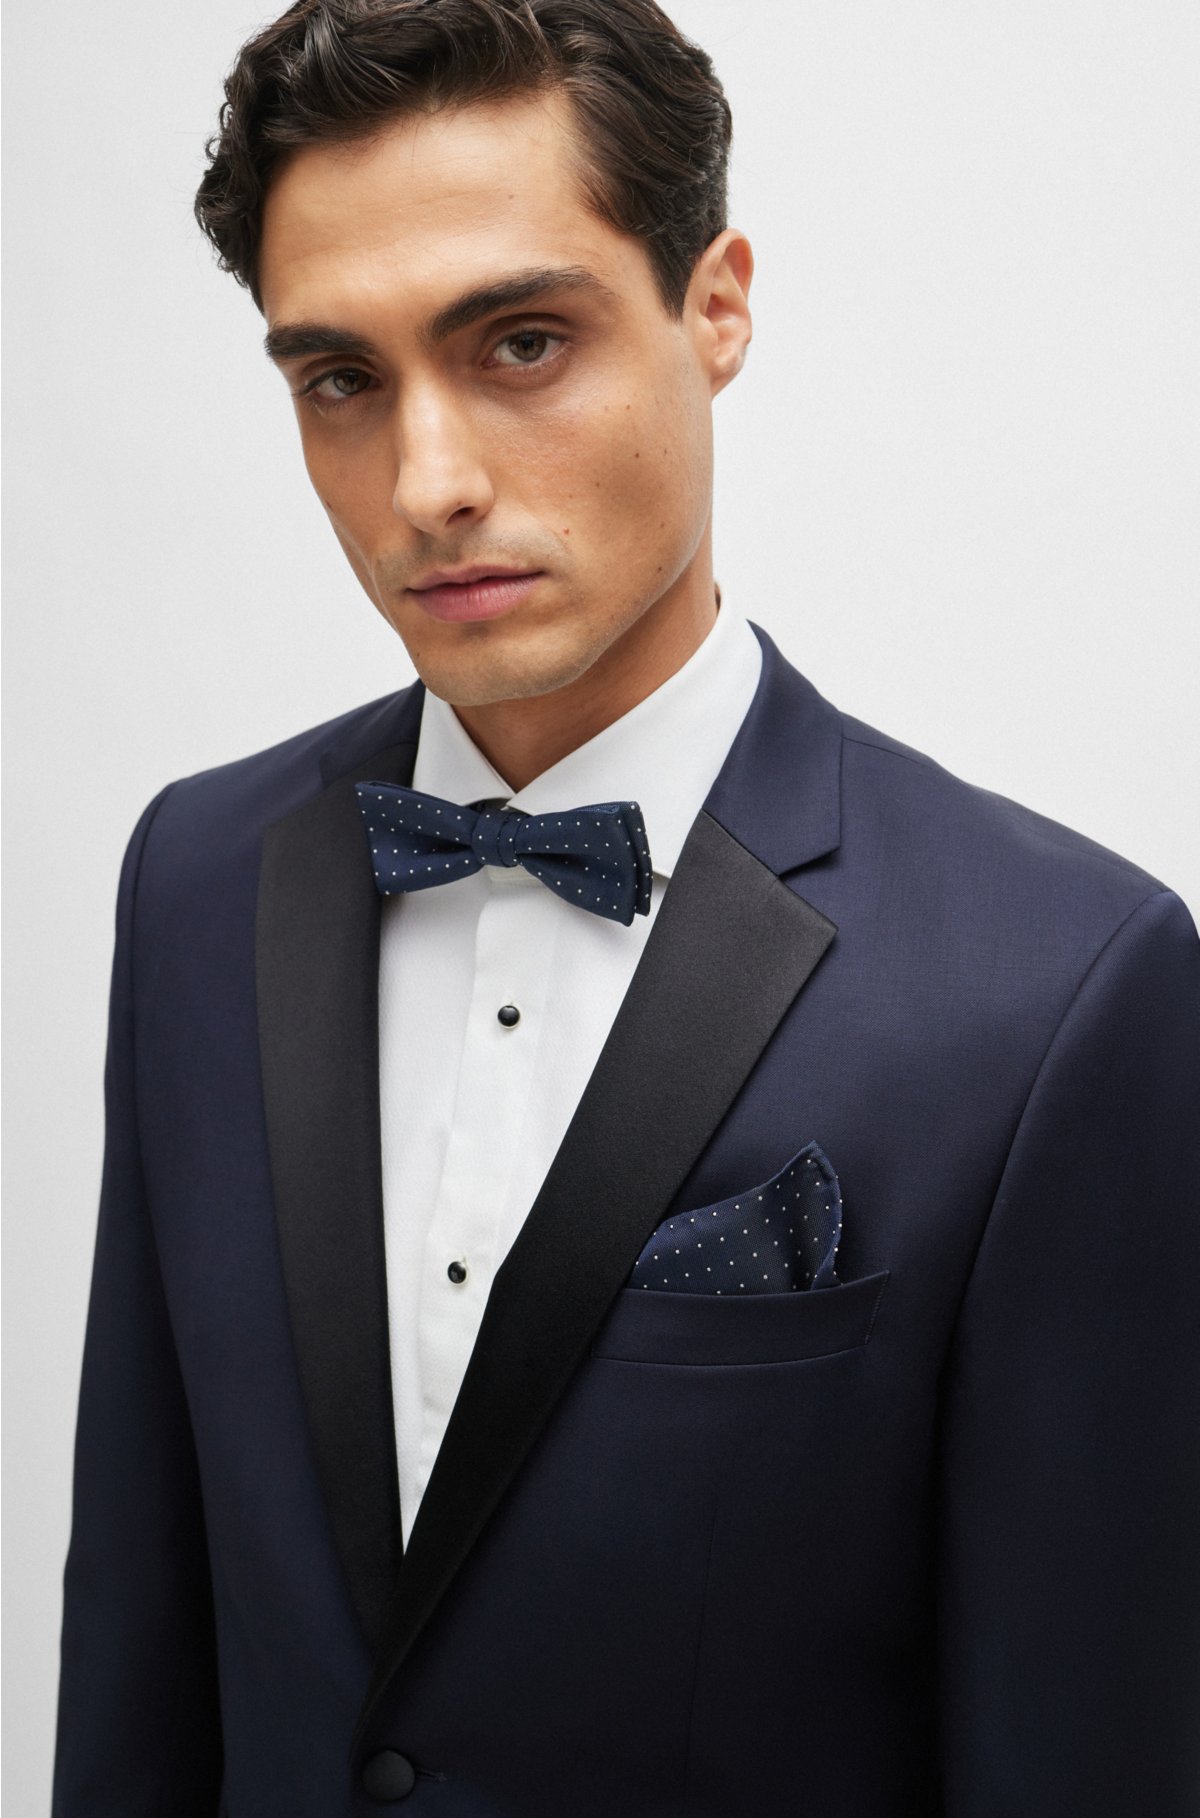 Silk-blend tie and pocket square set, Dark Blue